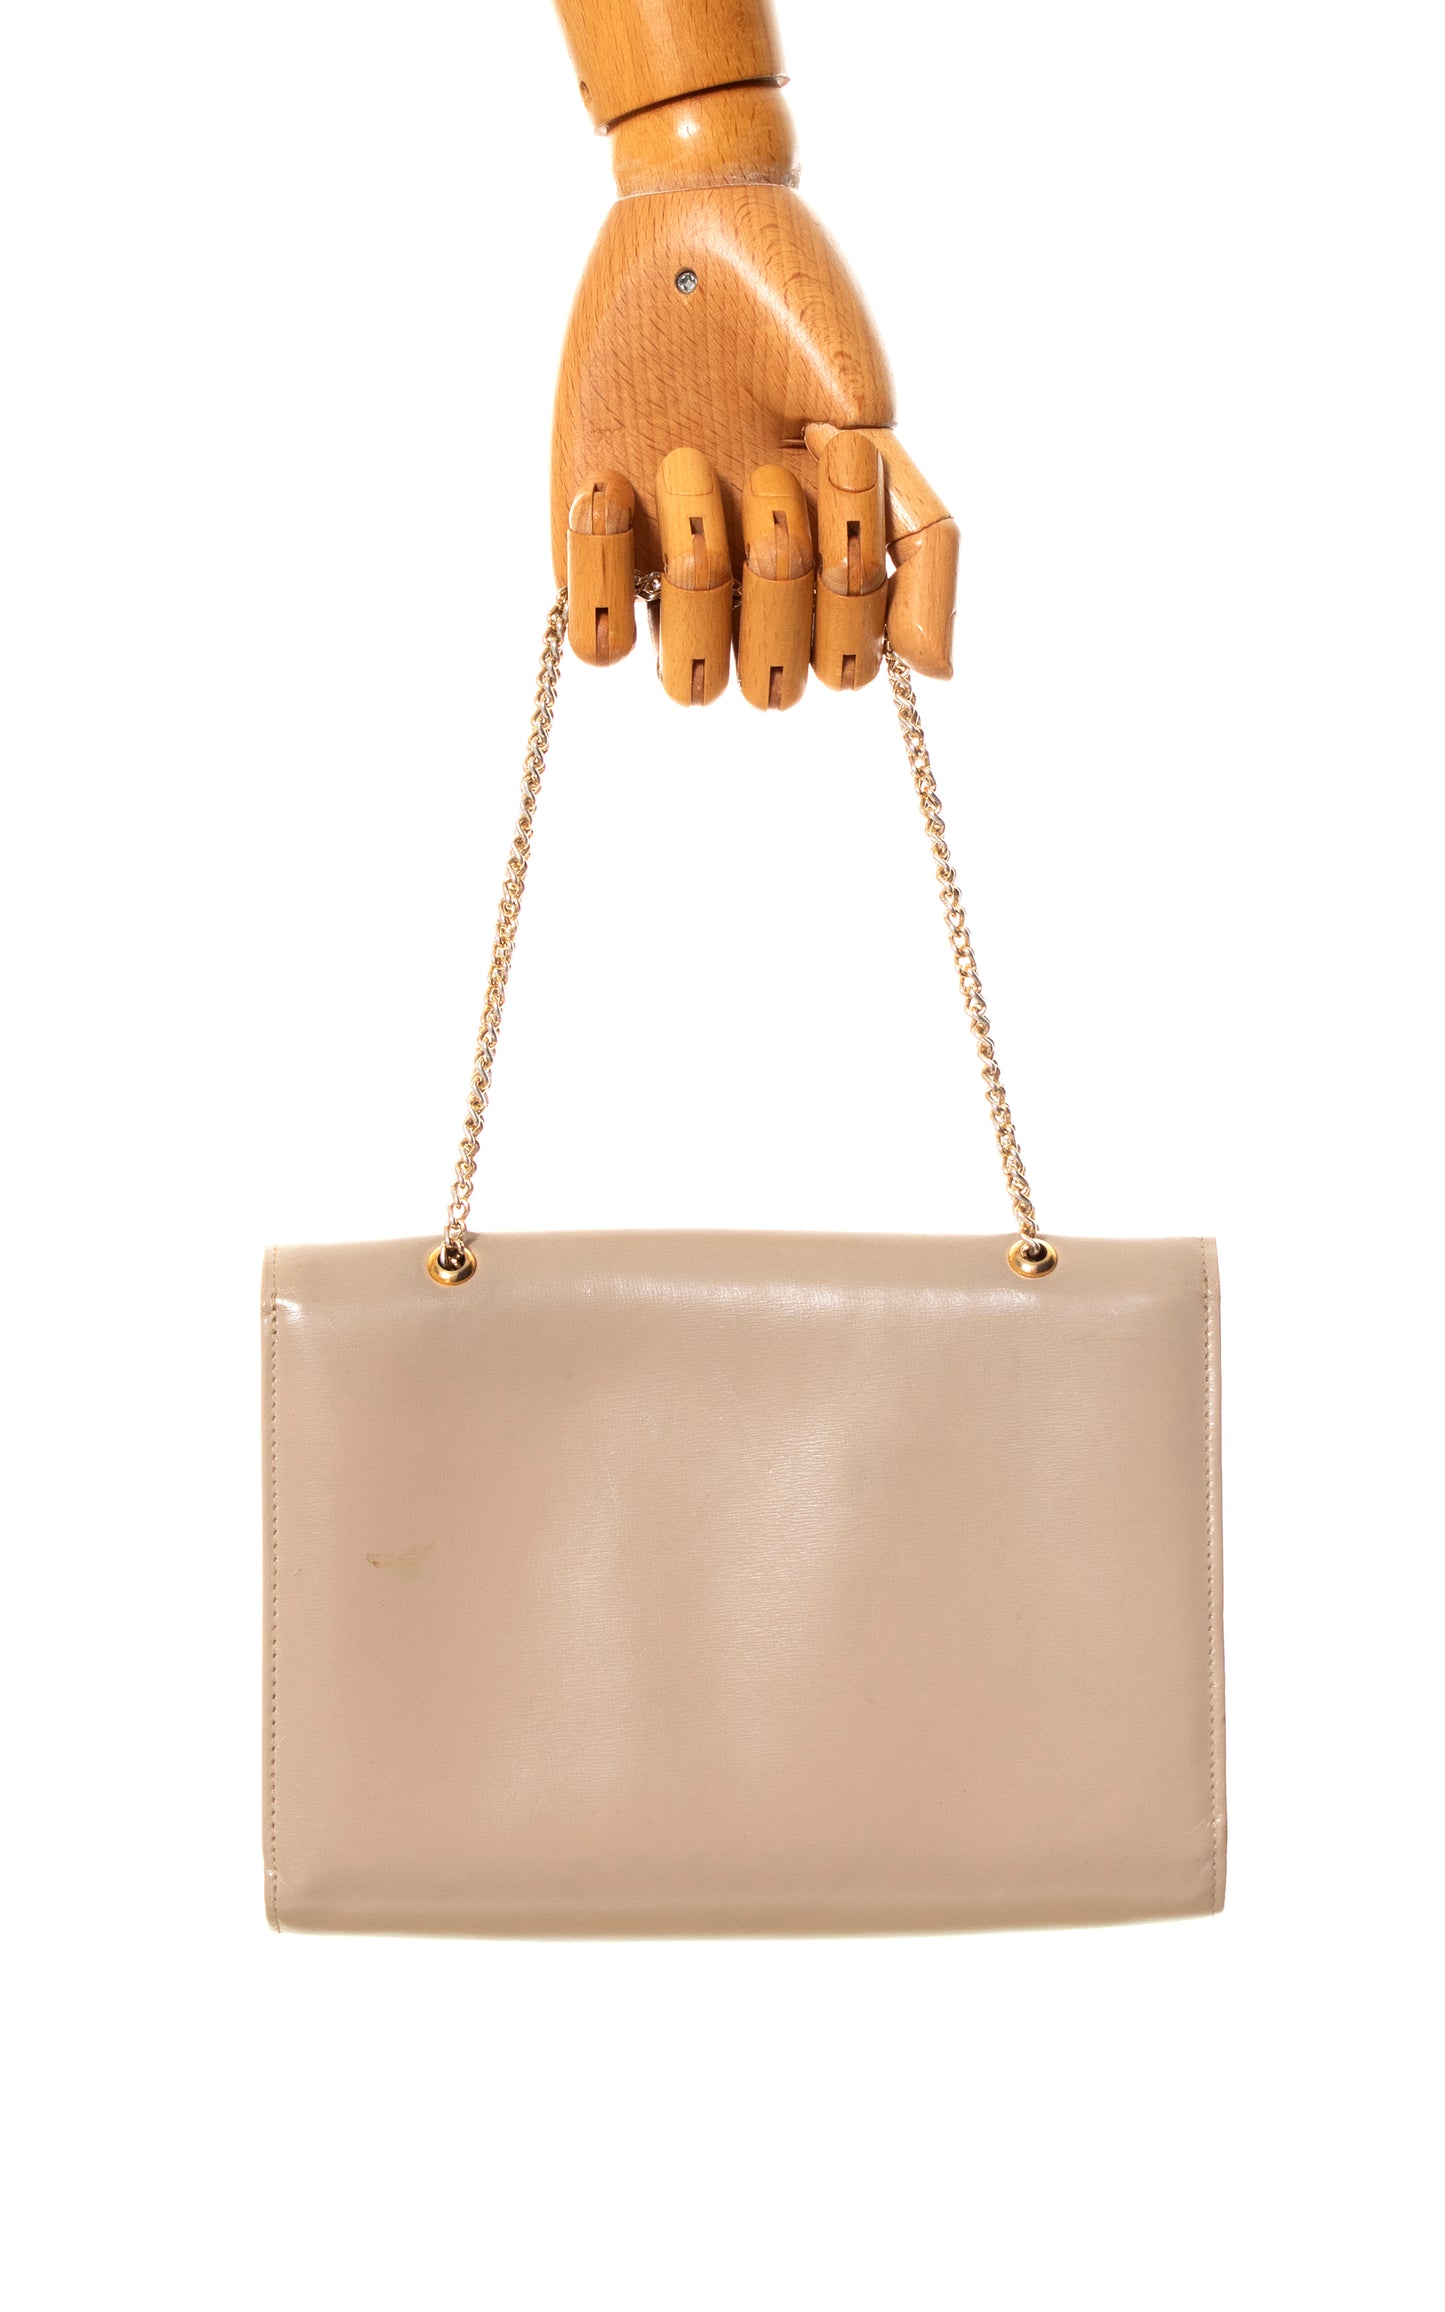 1970s Dual-Length Strap Leather Handbag